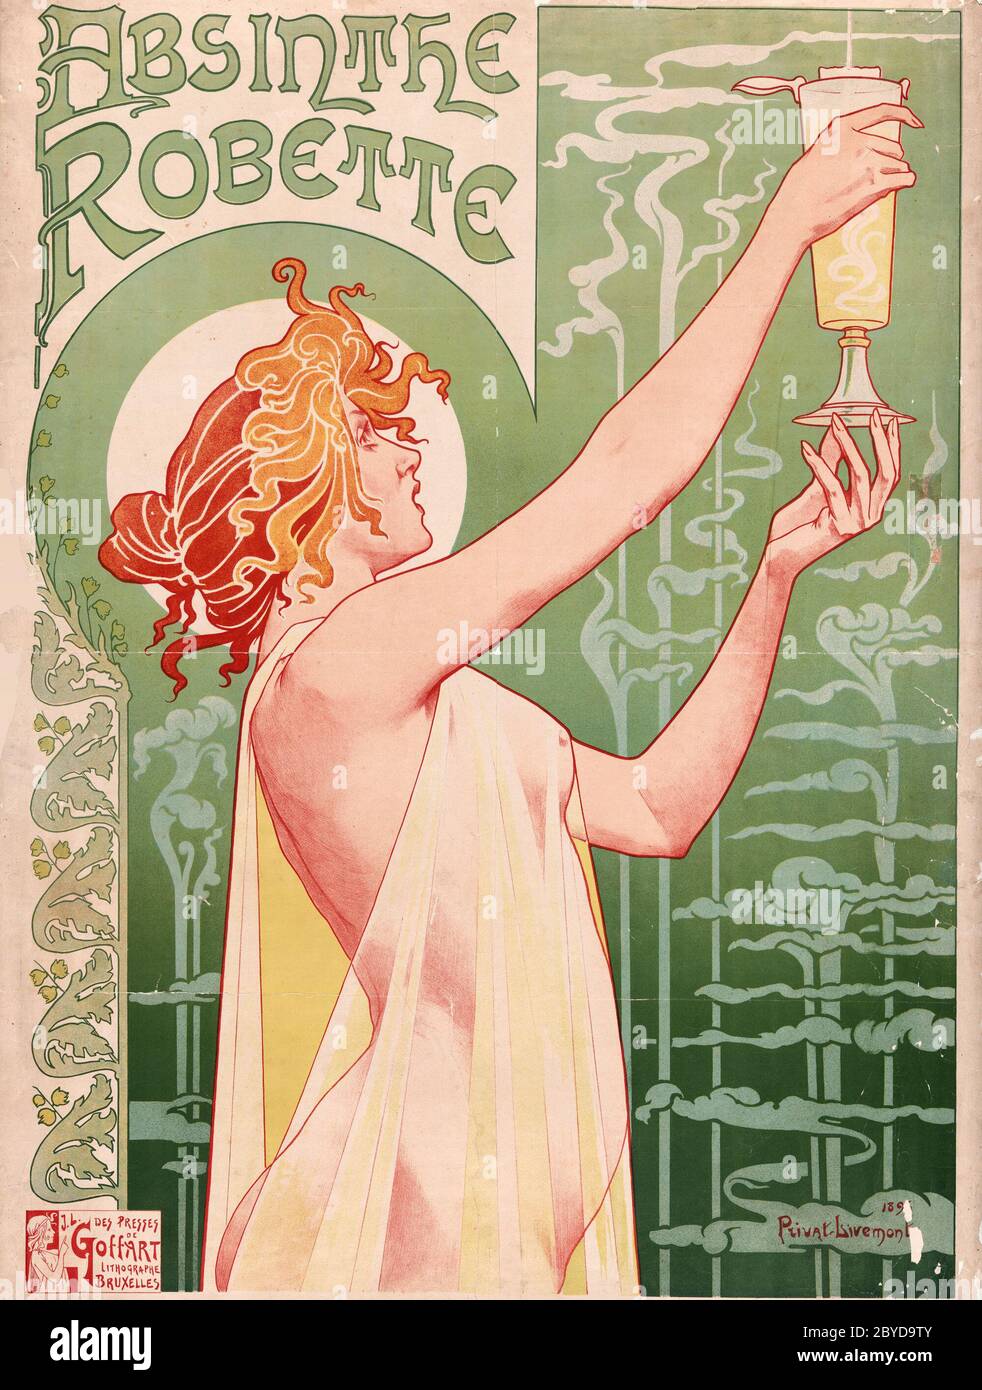 Absinthe Robette - Henri Privat-Livemont, 1896 Stock Photo